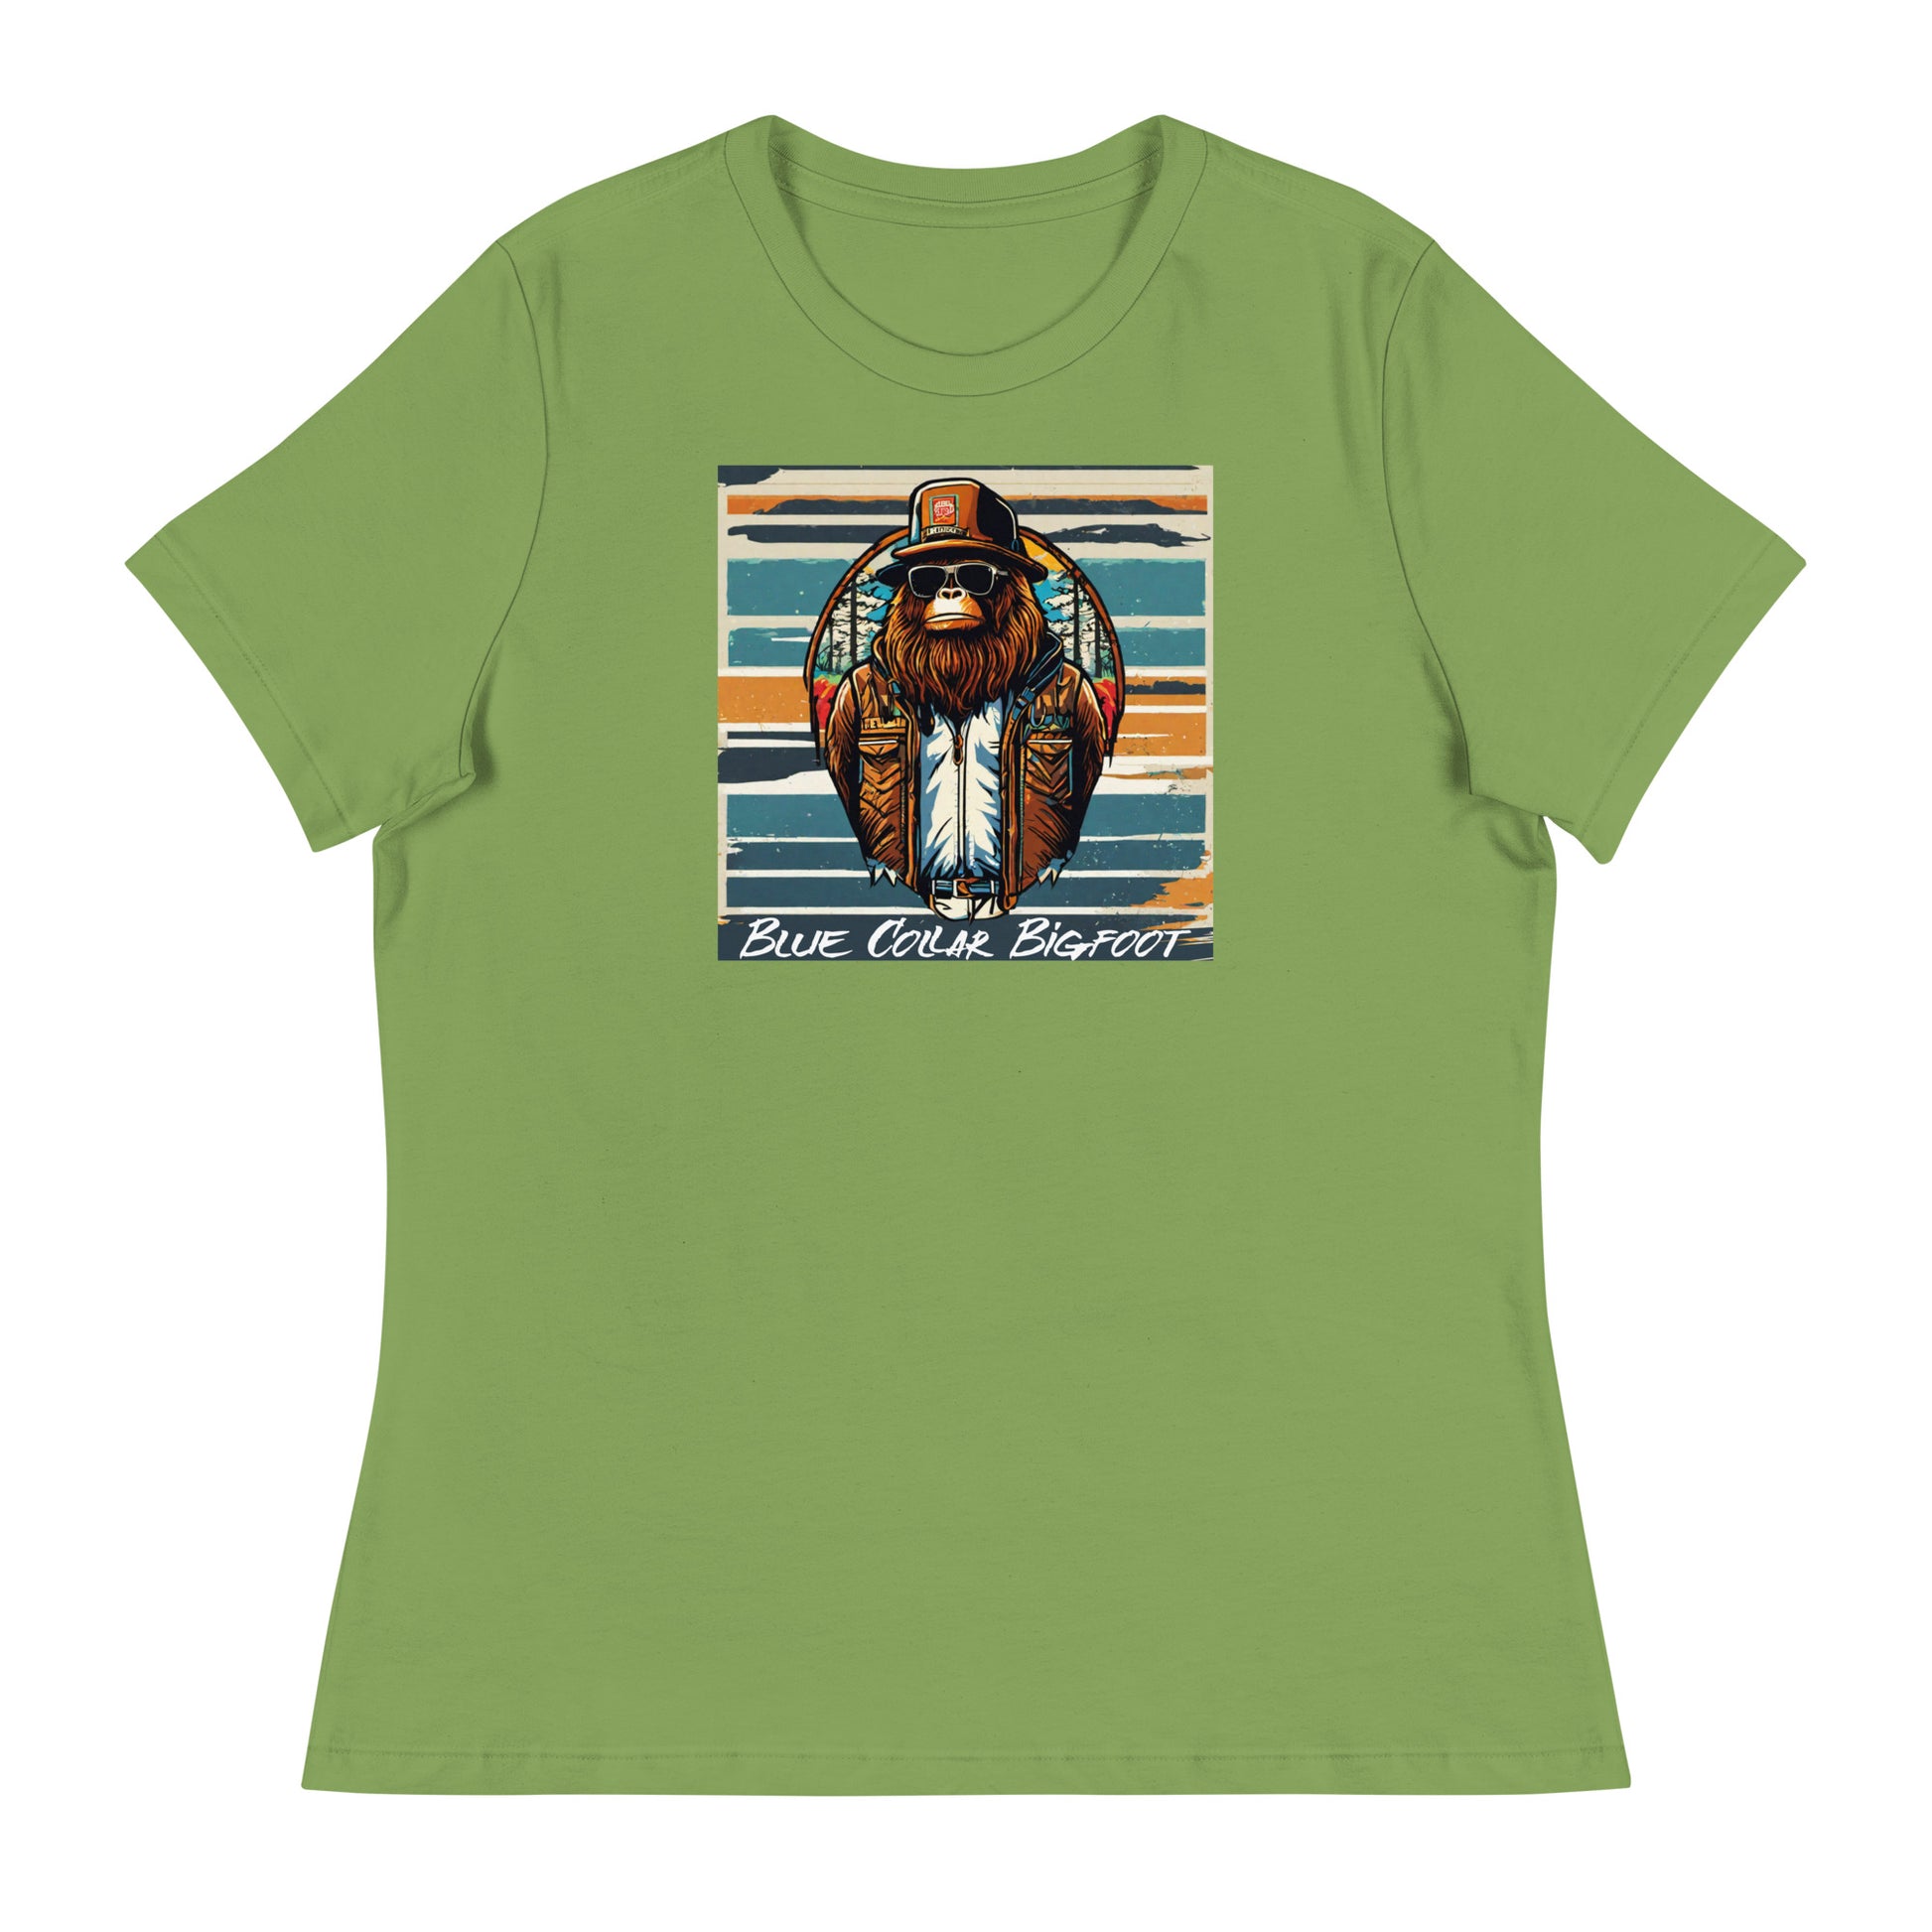 Blue-Collar Bigfoot Women's Graphic T-Shirt Leaf